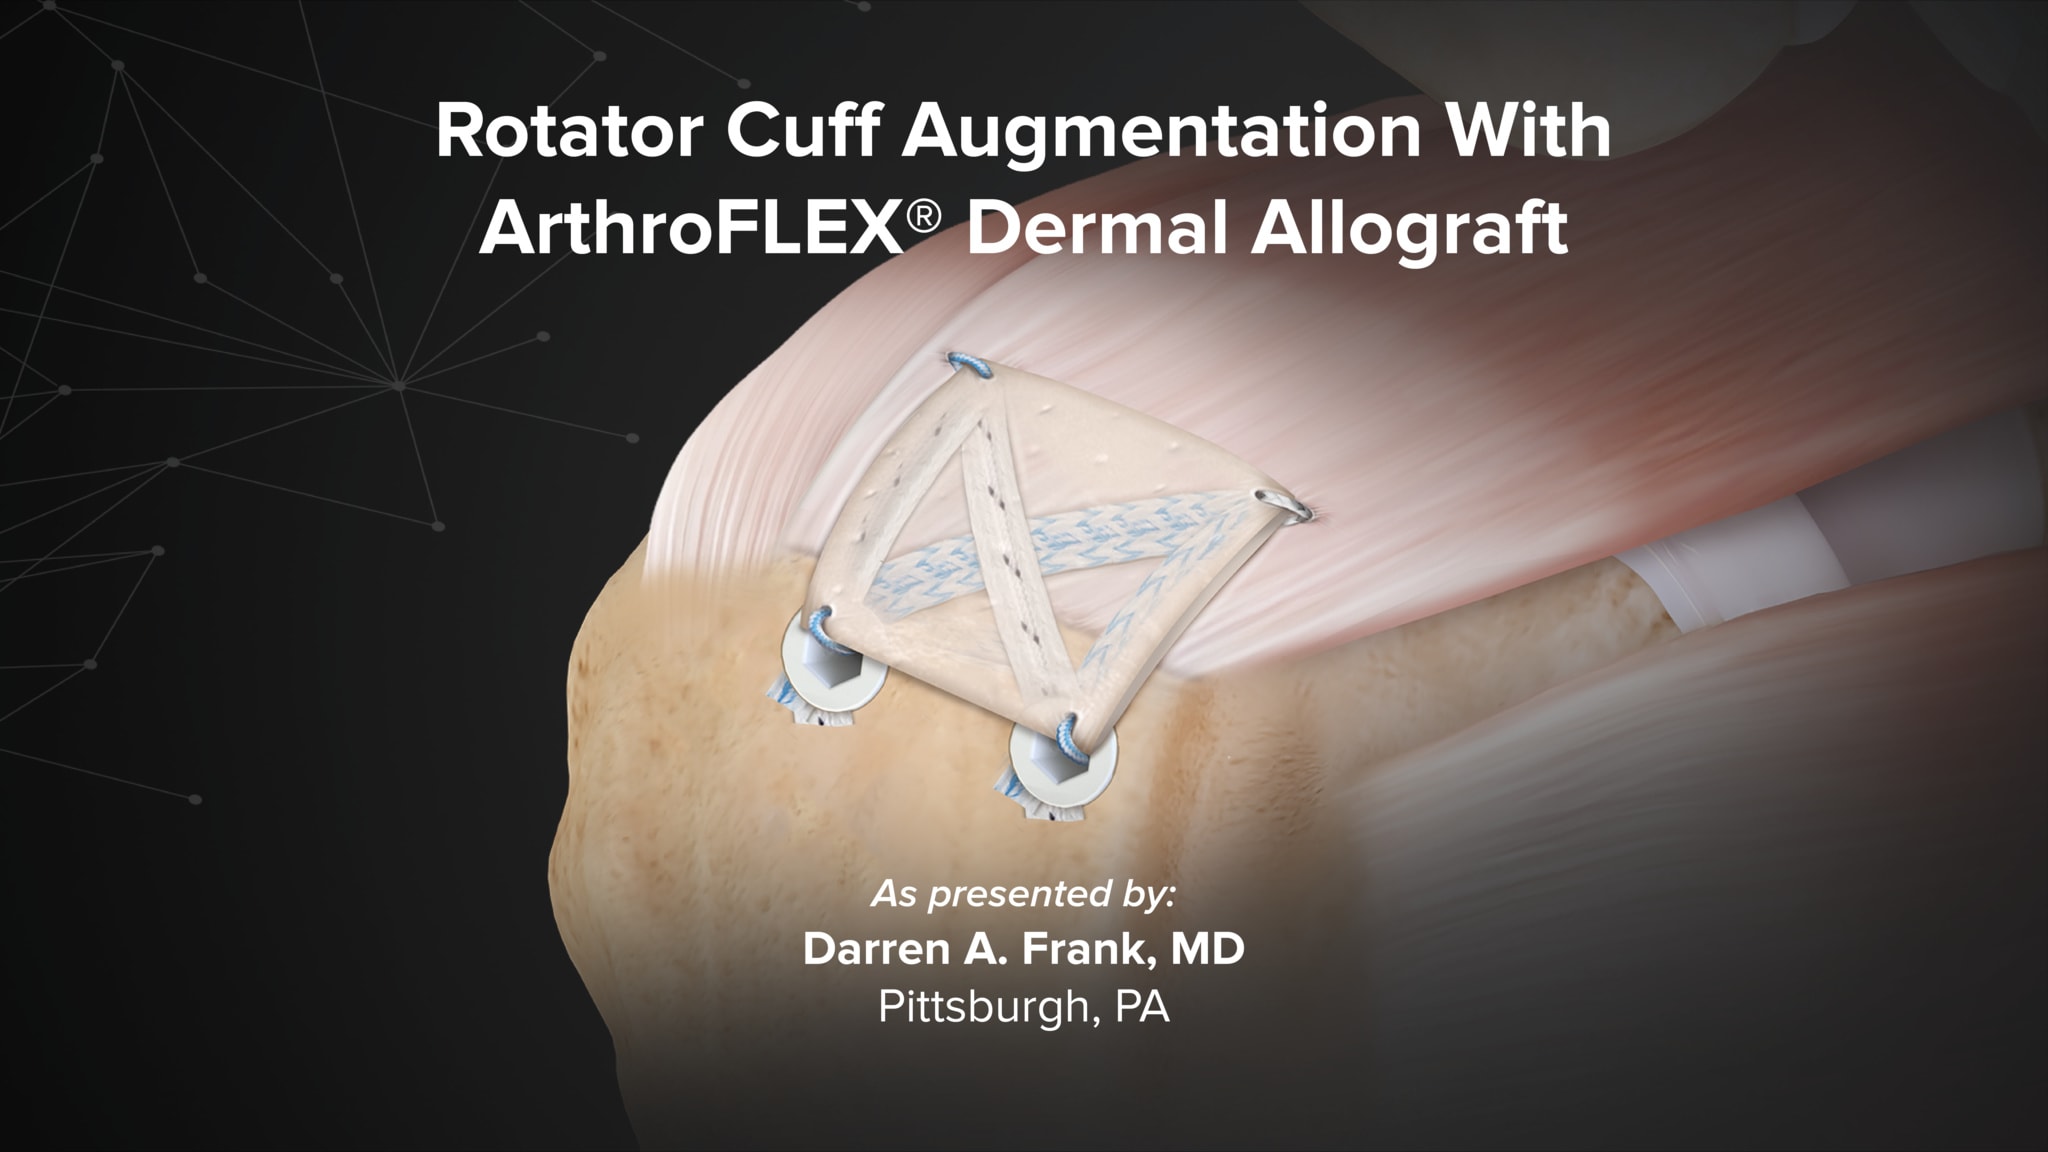 Rotator Cuff Augmentation With ArthroFLEX® Dermal Allograft